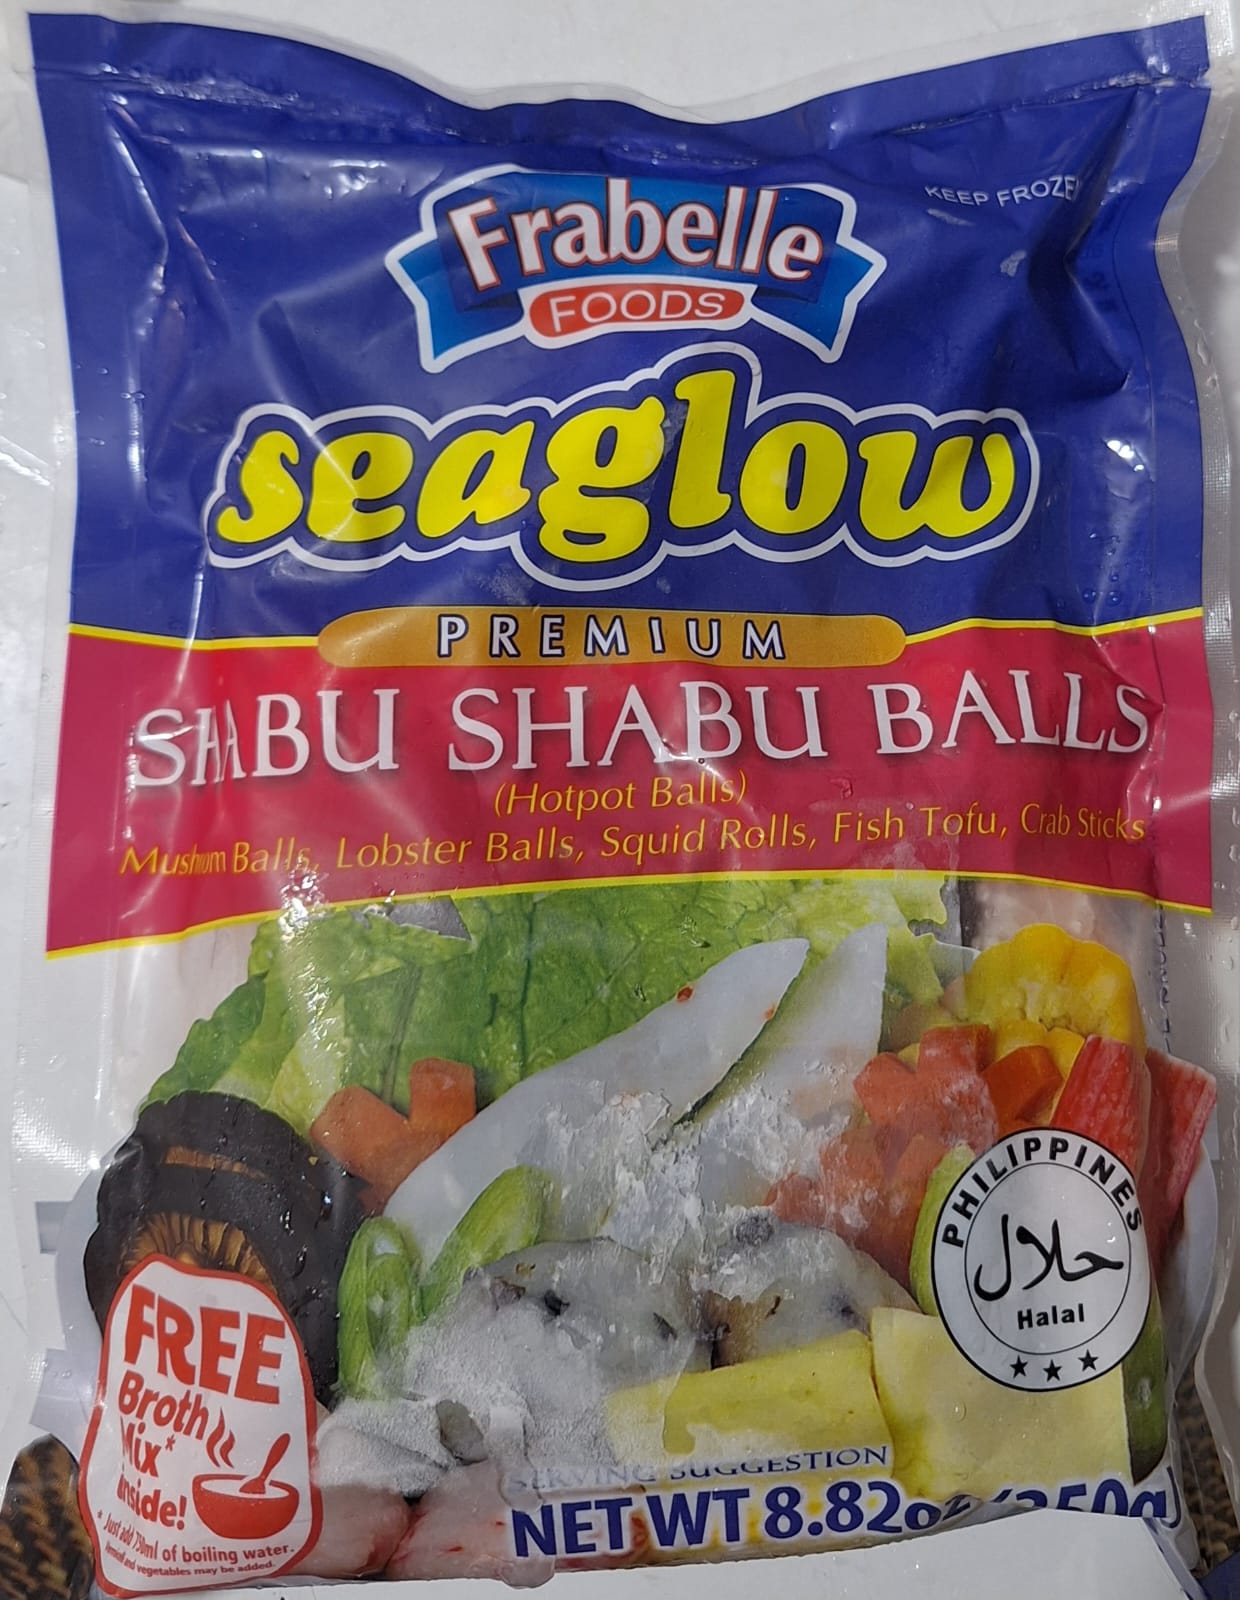 Premium Shabu Shabu Balls